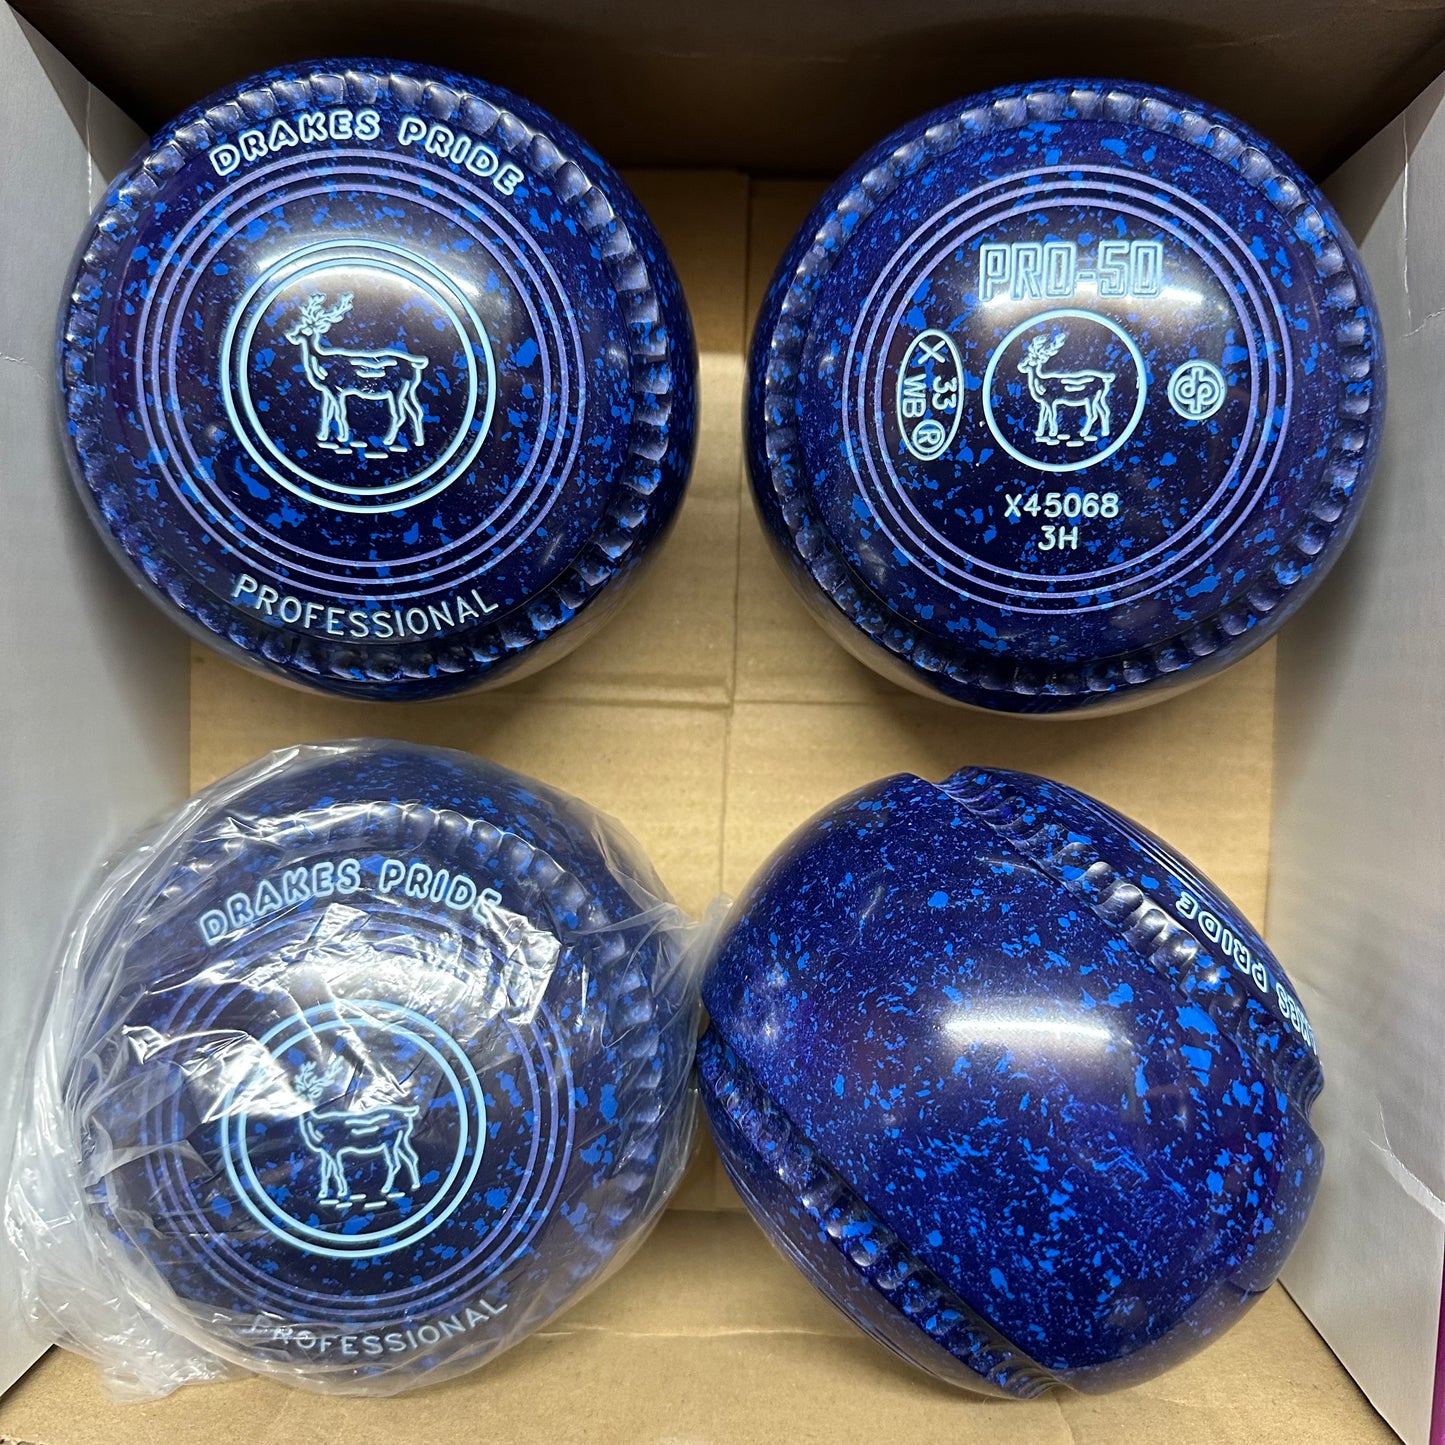 Drakes Pride PRO-50 - Size 3H - Dark Blue/Blue (Light Blue Rings) - WB33 Stamp